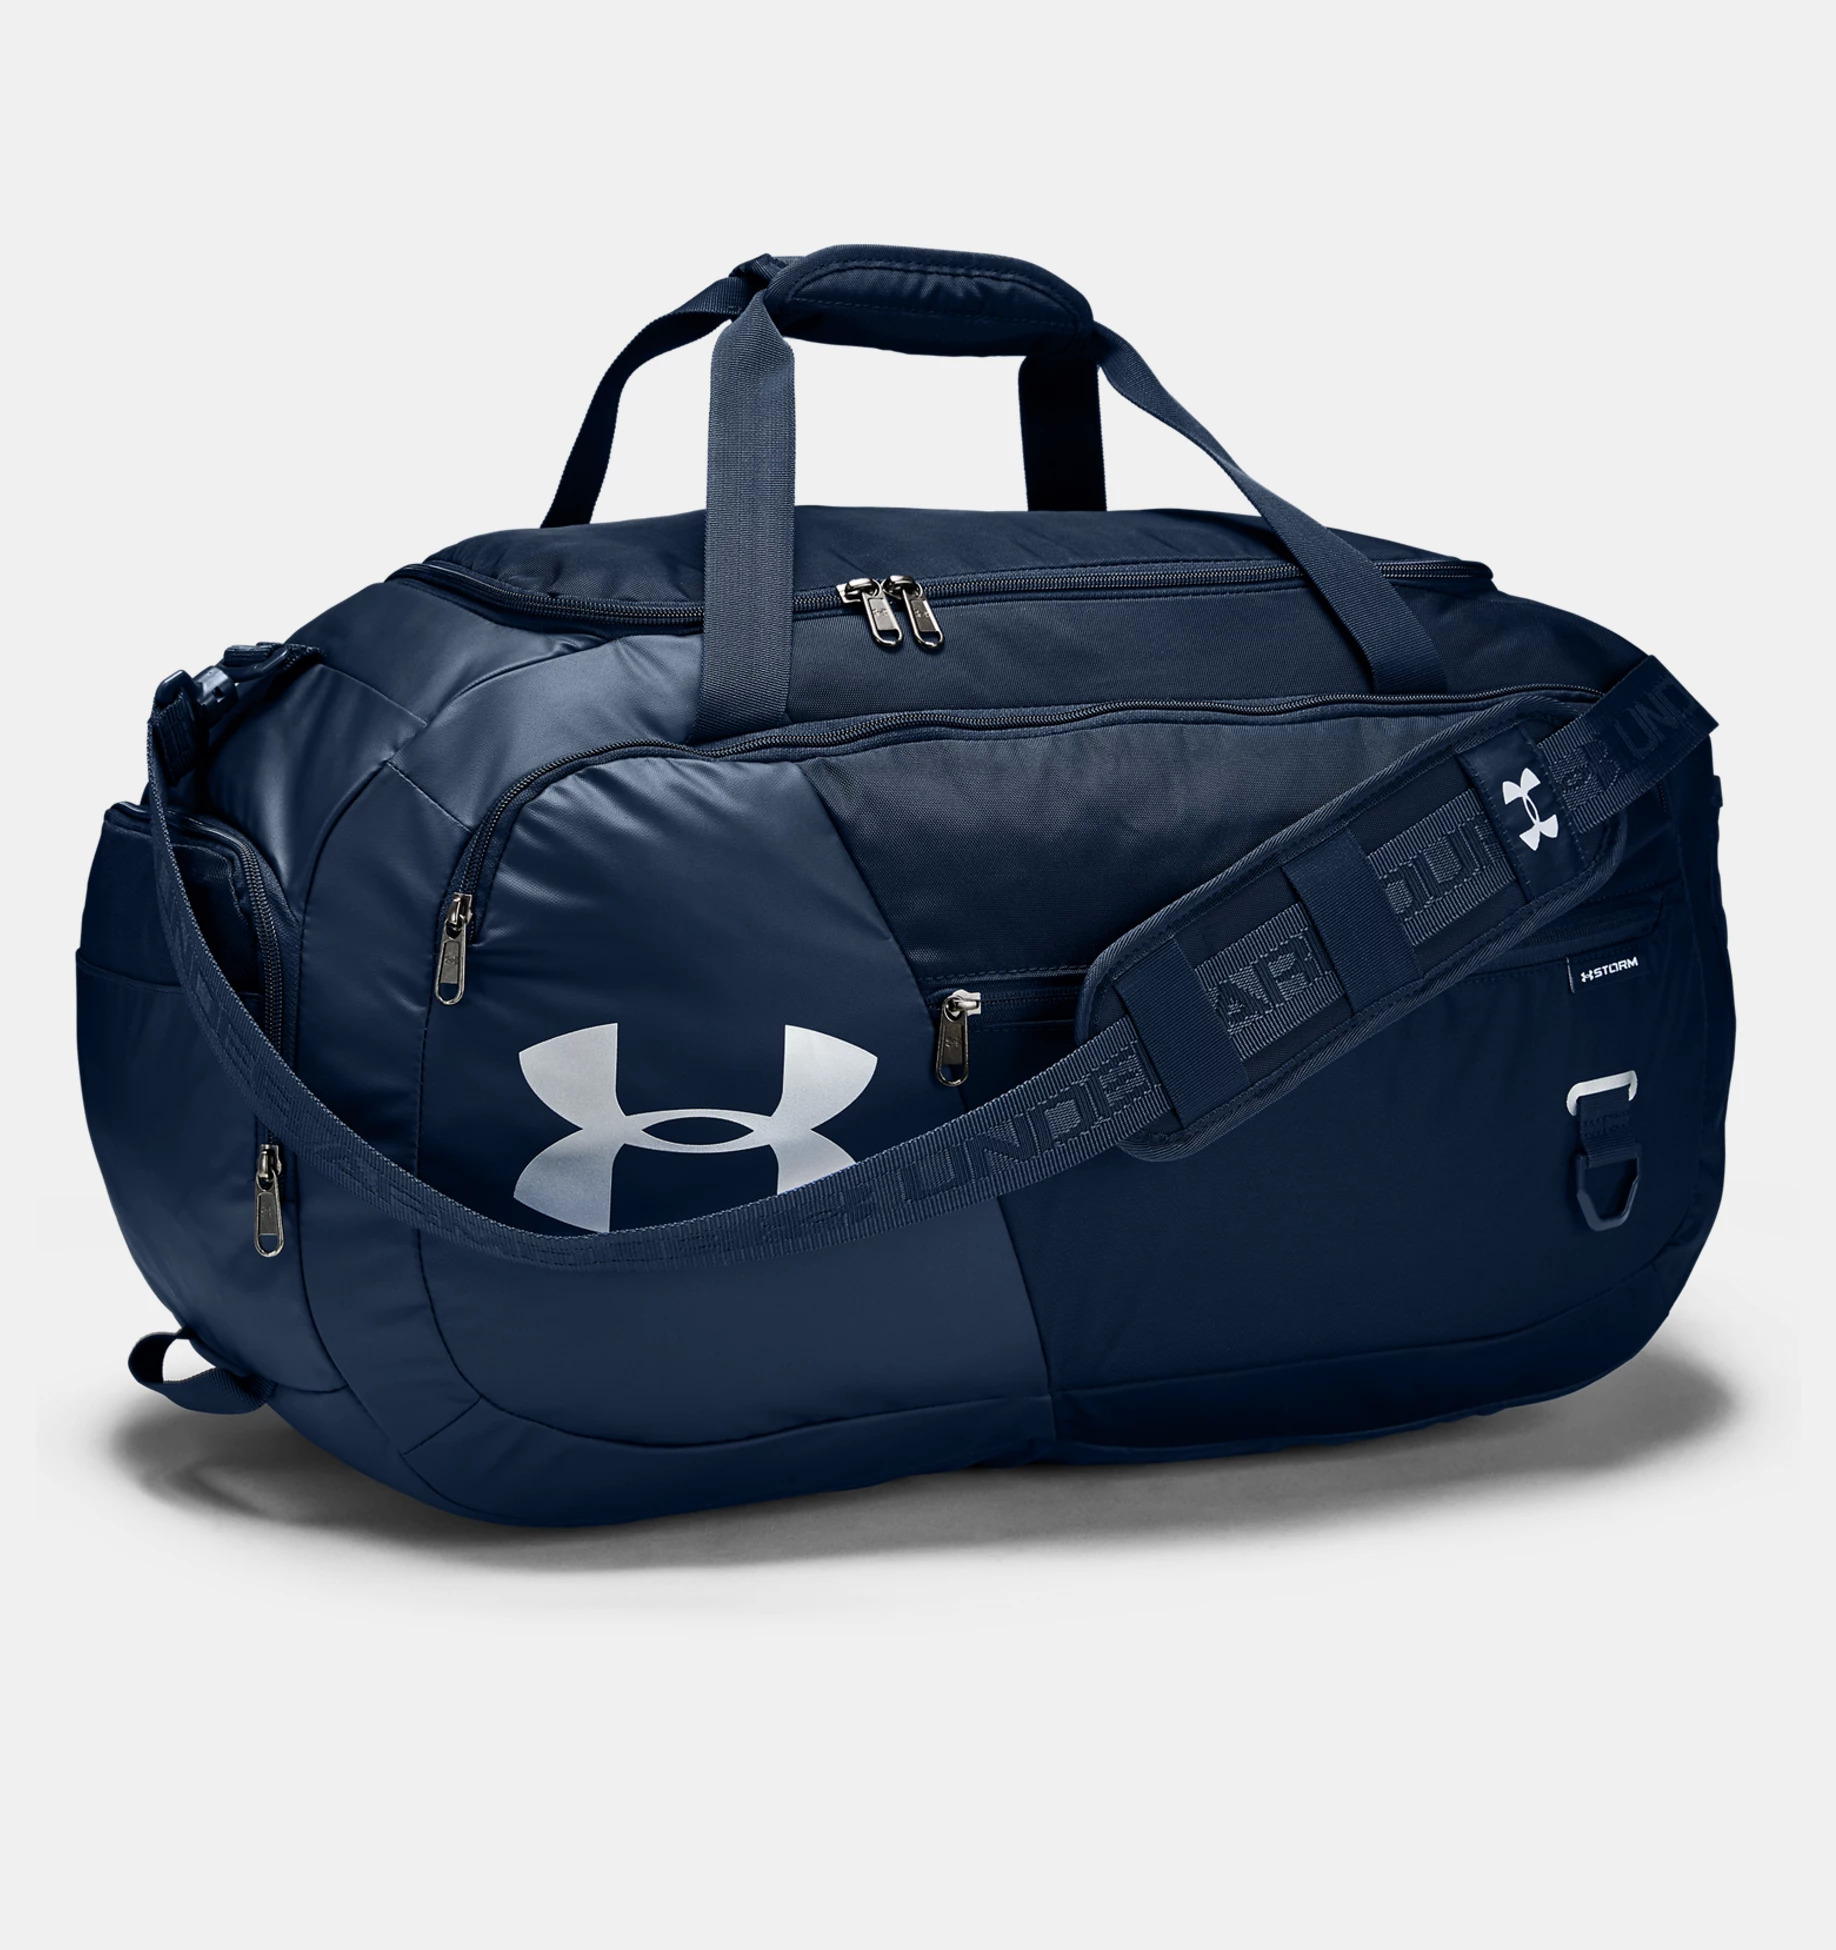 Under Armour Undeniable 4.0 Medium Duffle Bag (Academy/Silver) $20 + Free Shipping